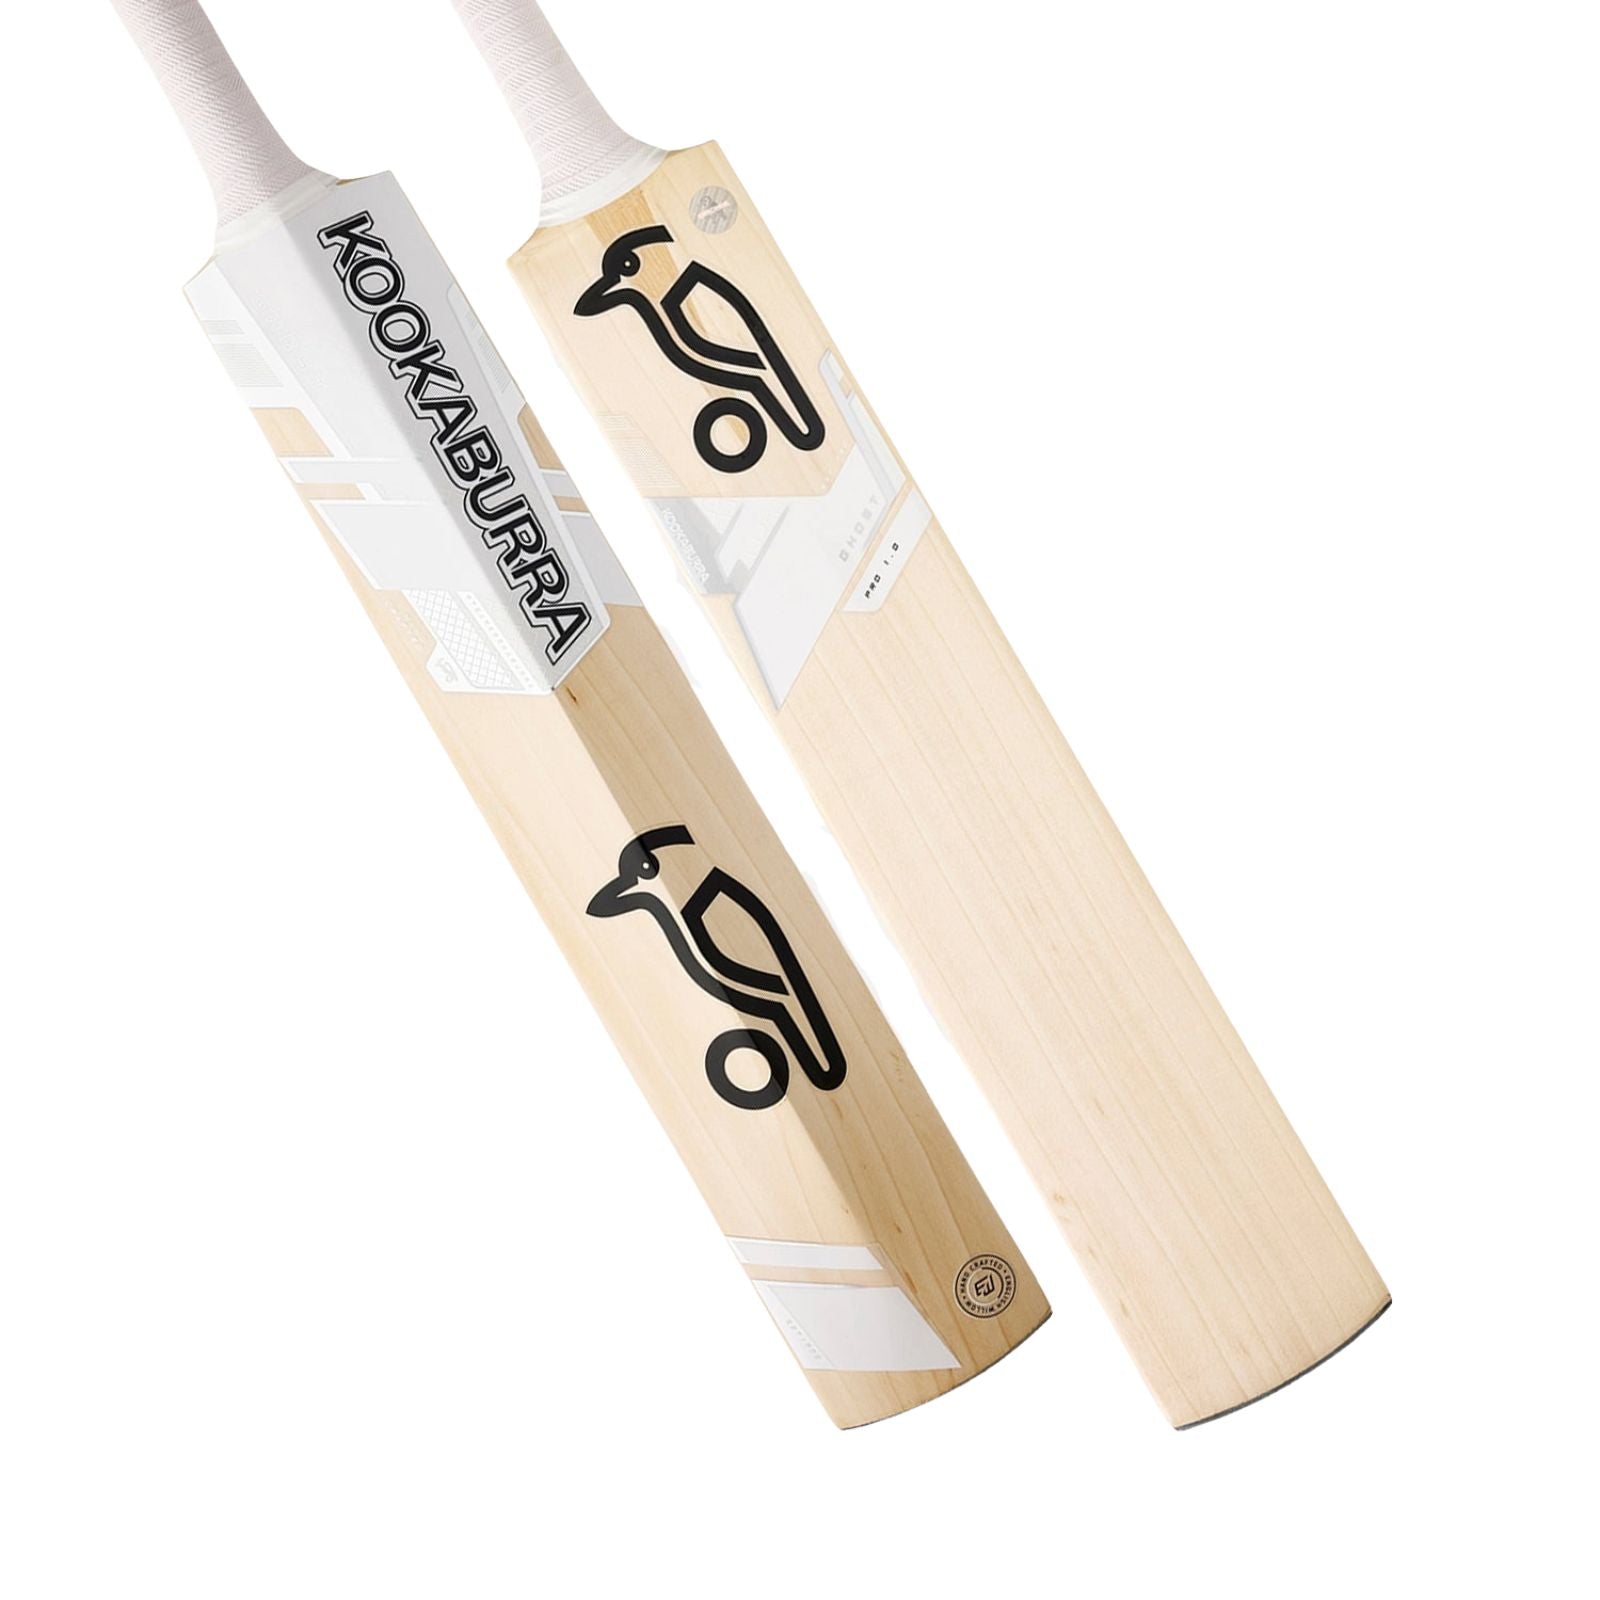 Kookaburra Ghost Pro 1.0 Cricket Bat - Senior Long Blade